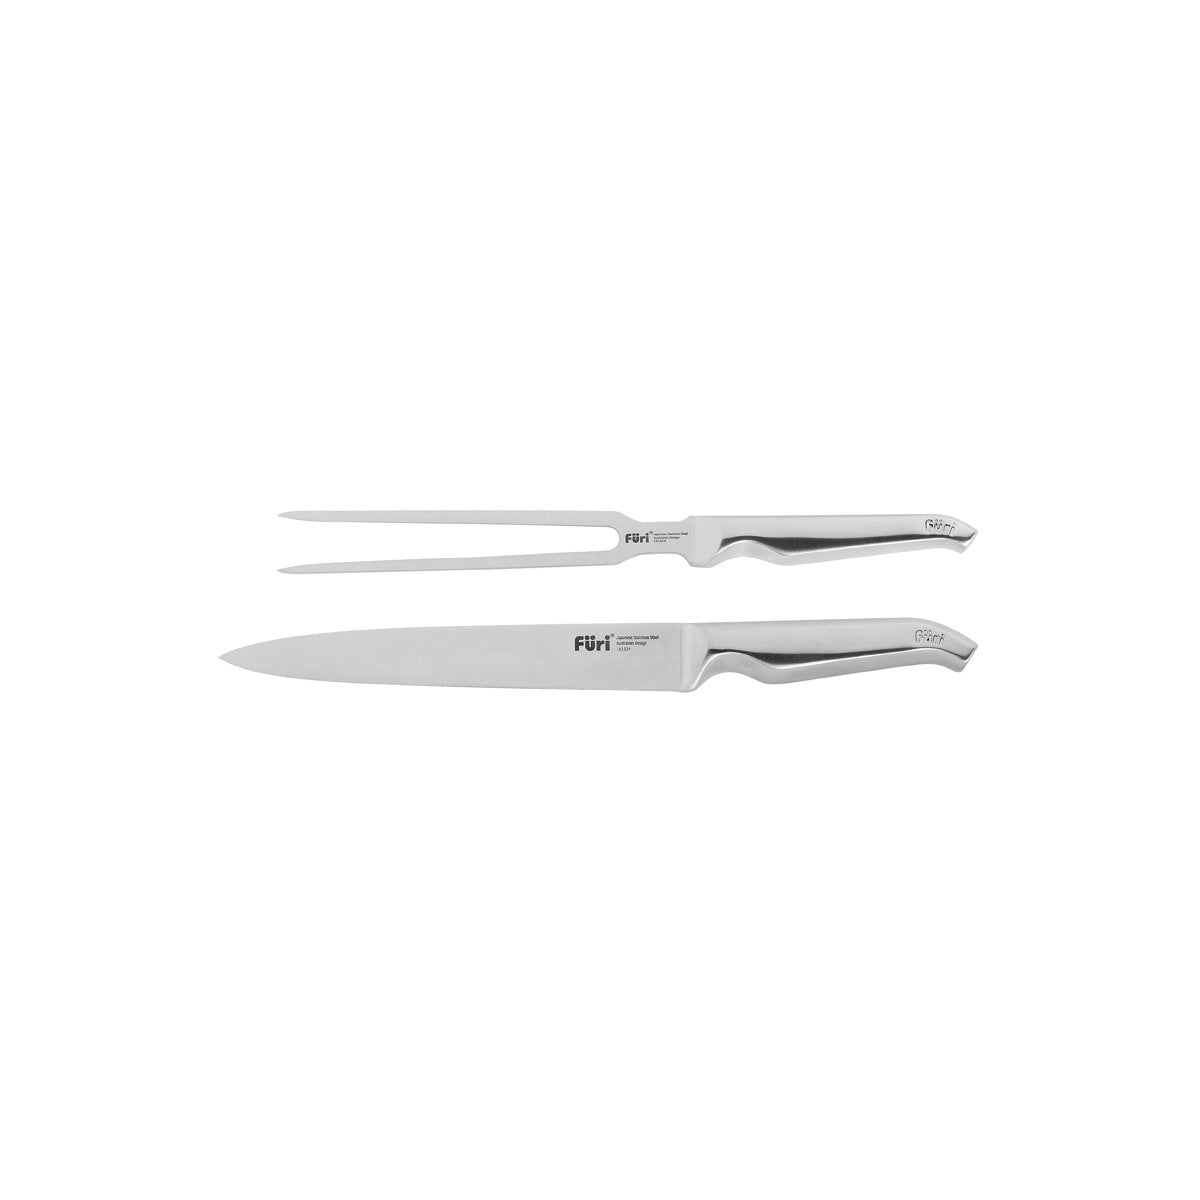 27161 Furi Pro Carving Knife Set 2pc Tomkin Australia Hospitality Supplies